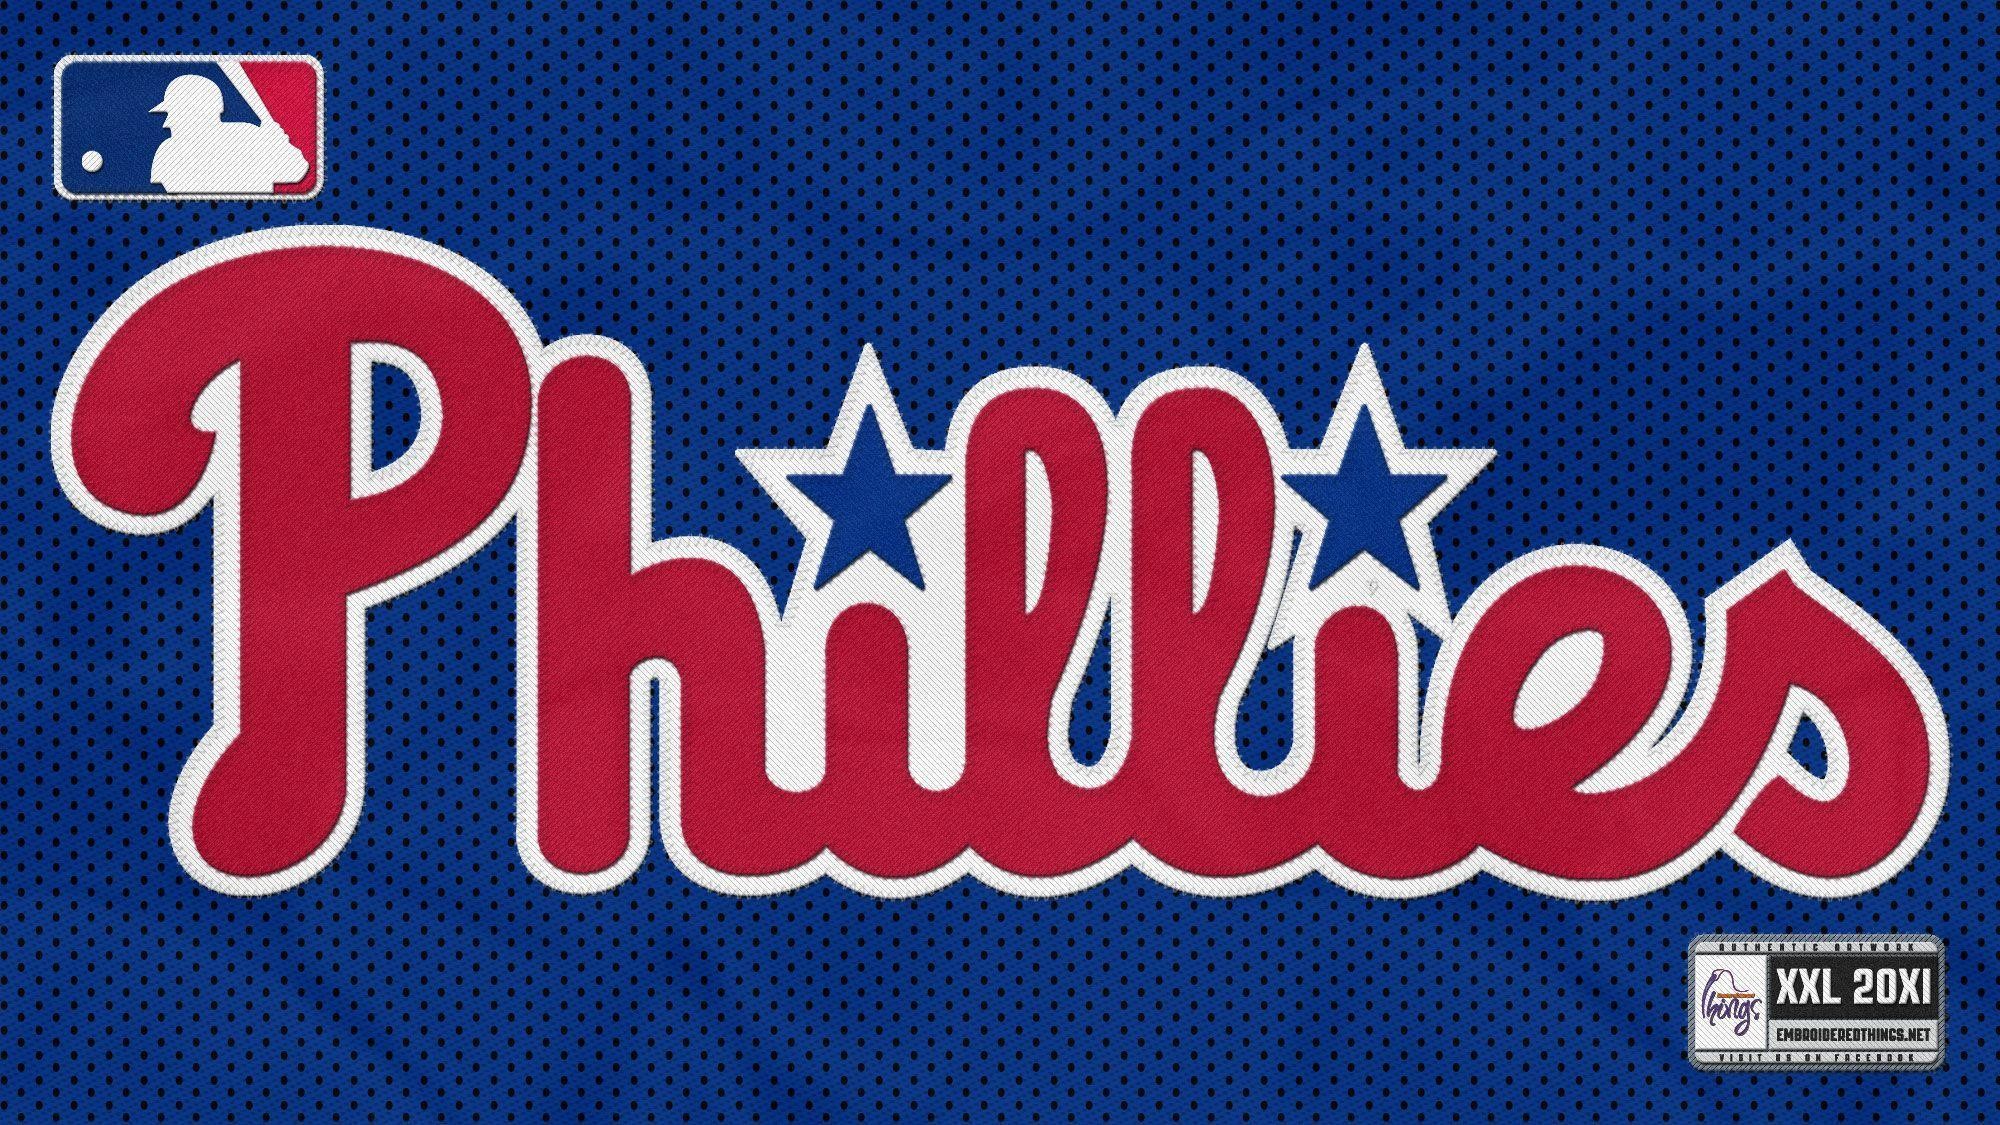 Philadelphia Phillies Wallpapers  Philles logo Free 4k 1080p Hd